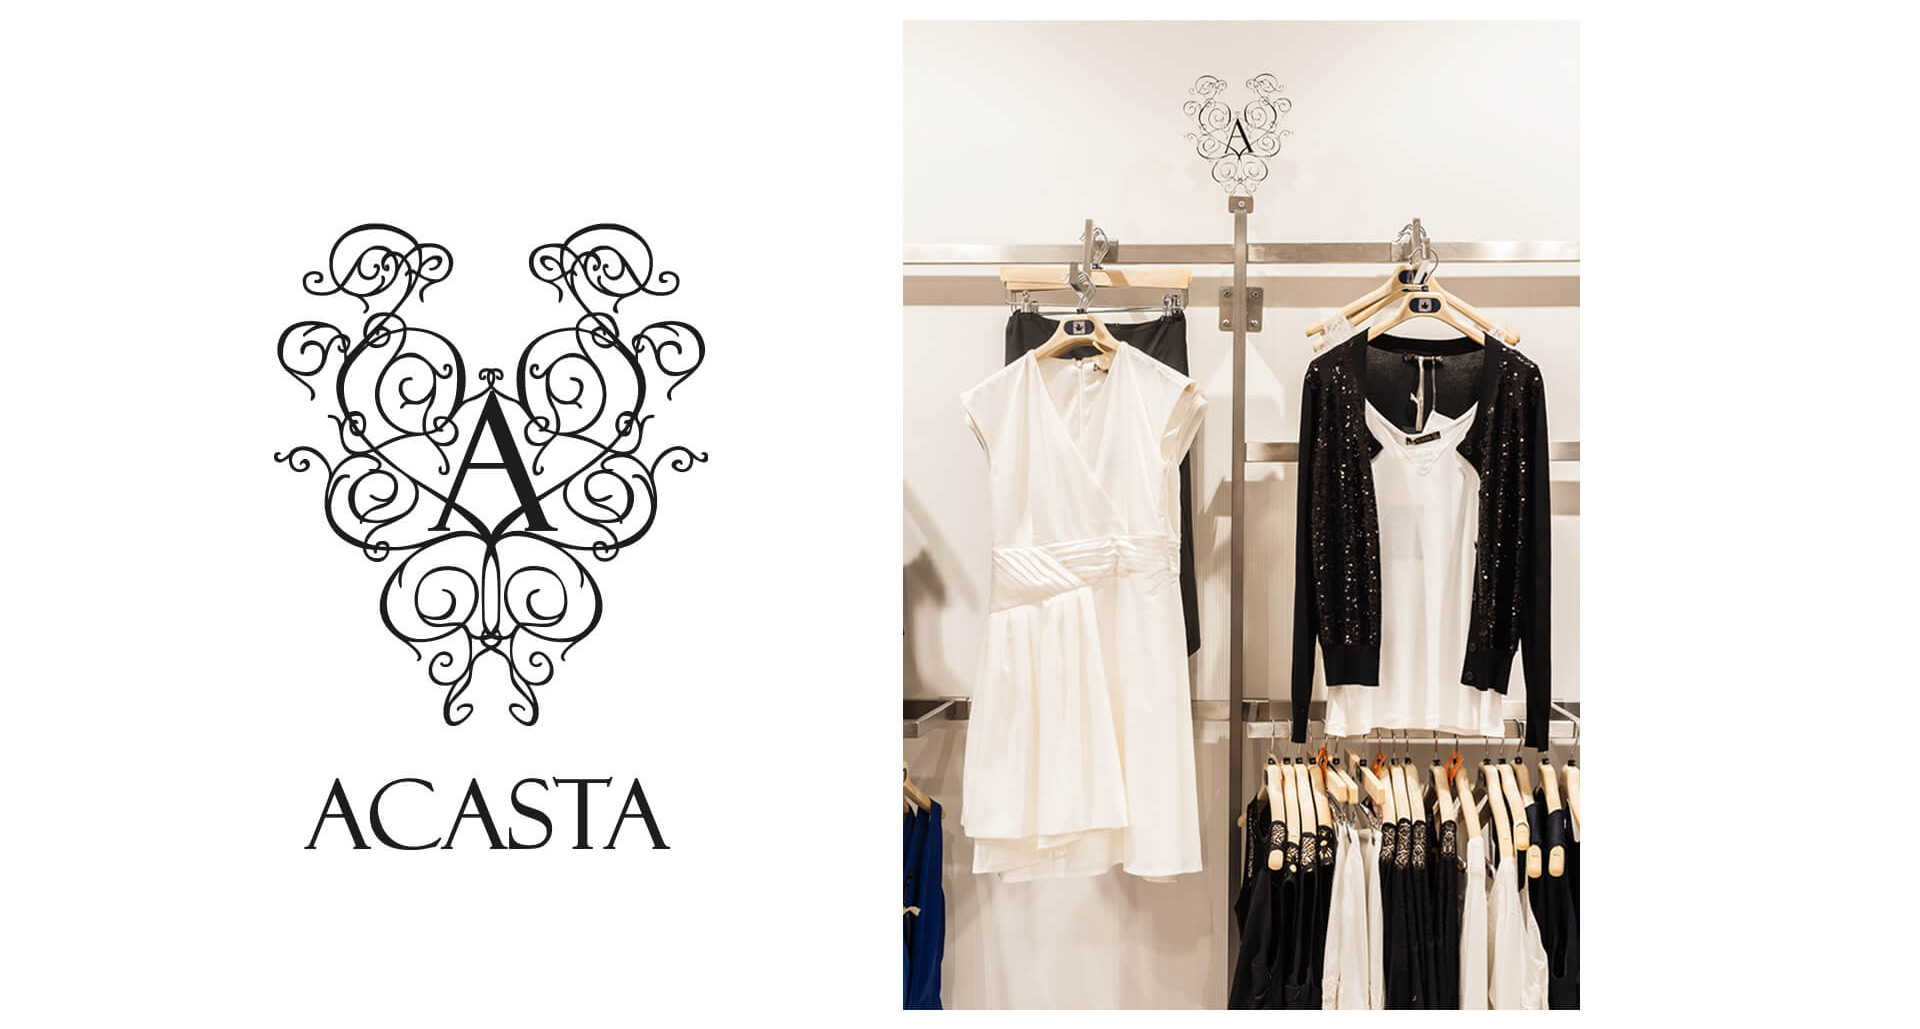 Snow Queen, Снежная королева,  Russia fashion store retail interior design, rebrand, Acasta graphics and merchandising system